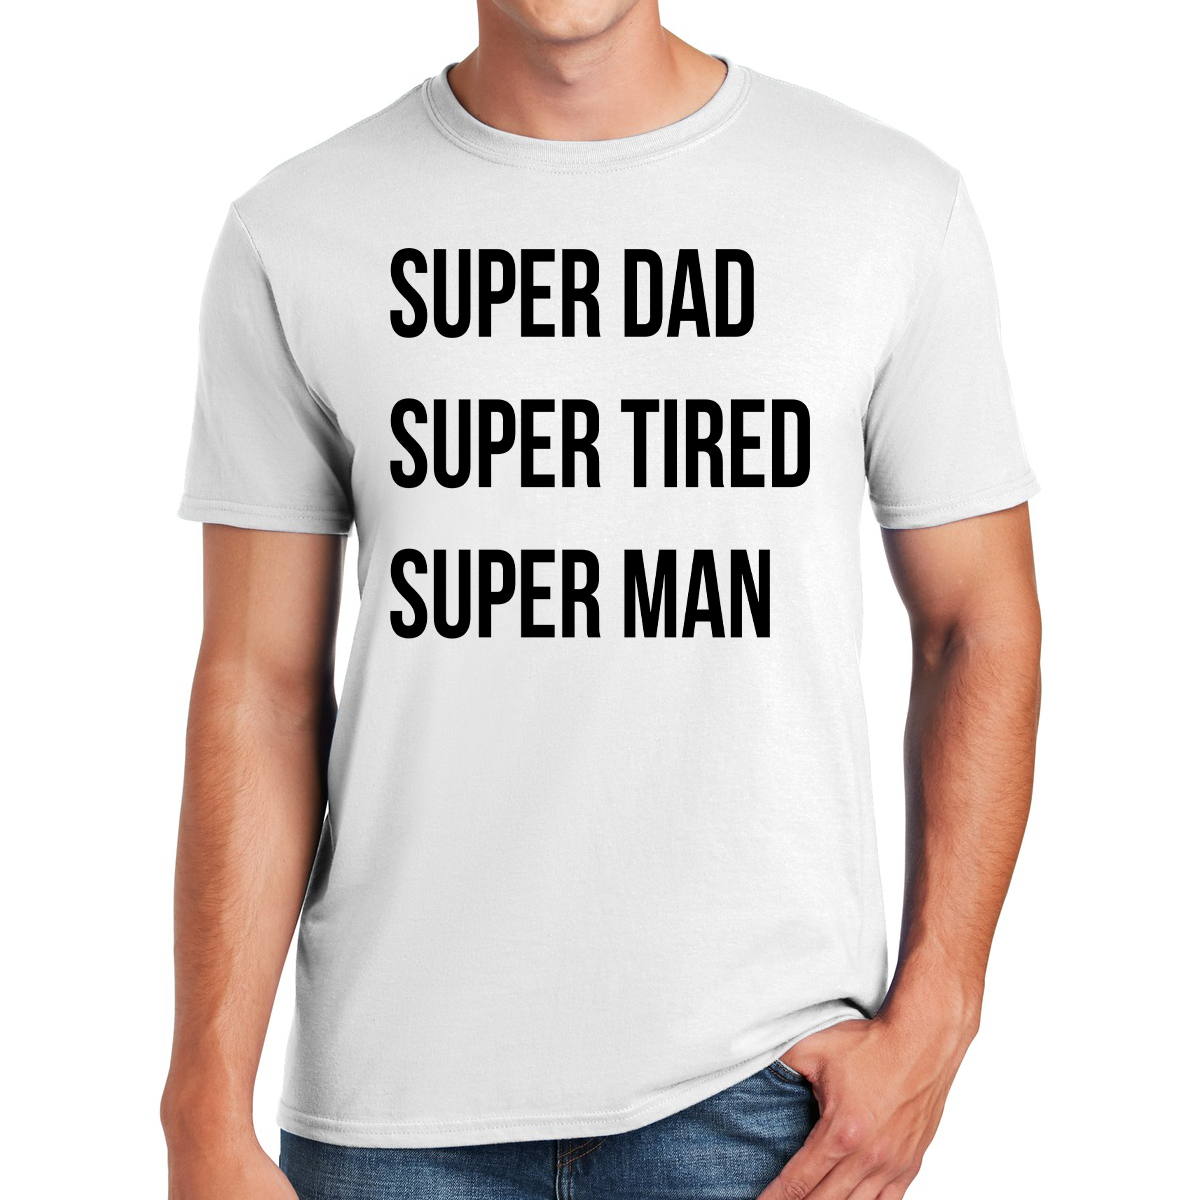 Super Dad Super Tired Super Man Juggling Fatherhood Like a Hero Awesome Dad T-shirt